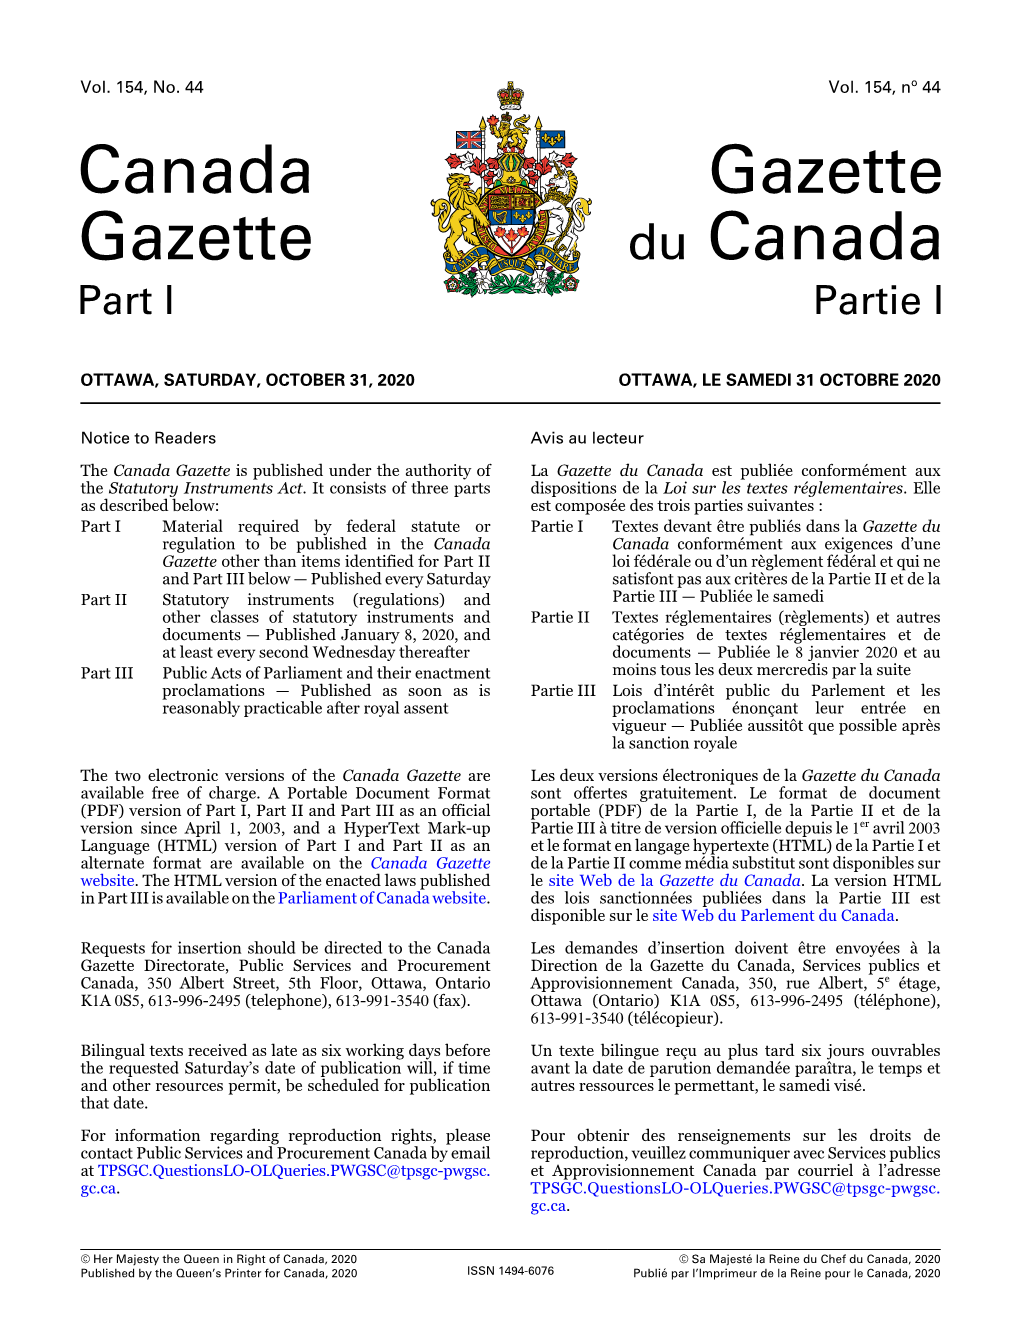 Gazette Du Canada, Partie I, Vol. 154, No. 44, Le 31 Octobre 2020